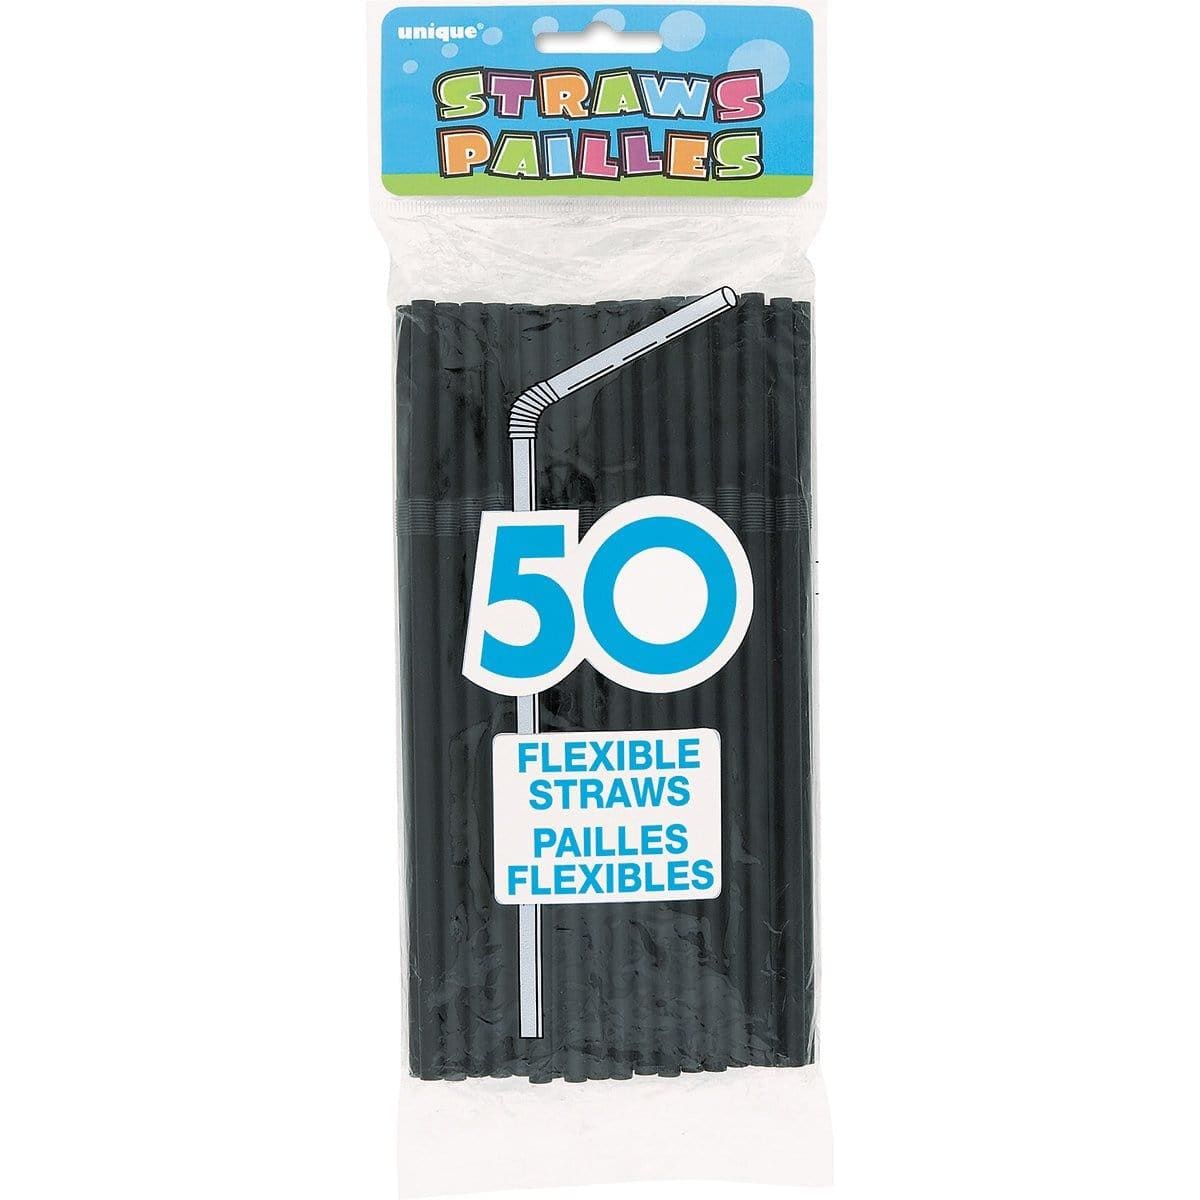 Buy Plasticware Black Flex Straws 50 Pkg. sold at Party Expert